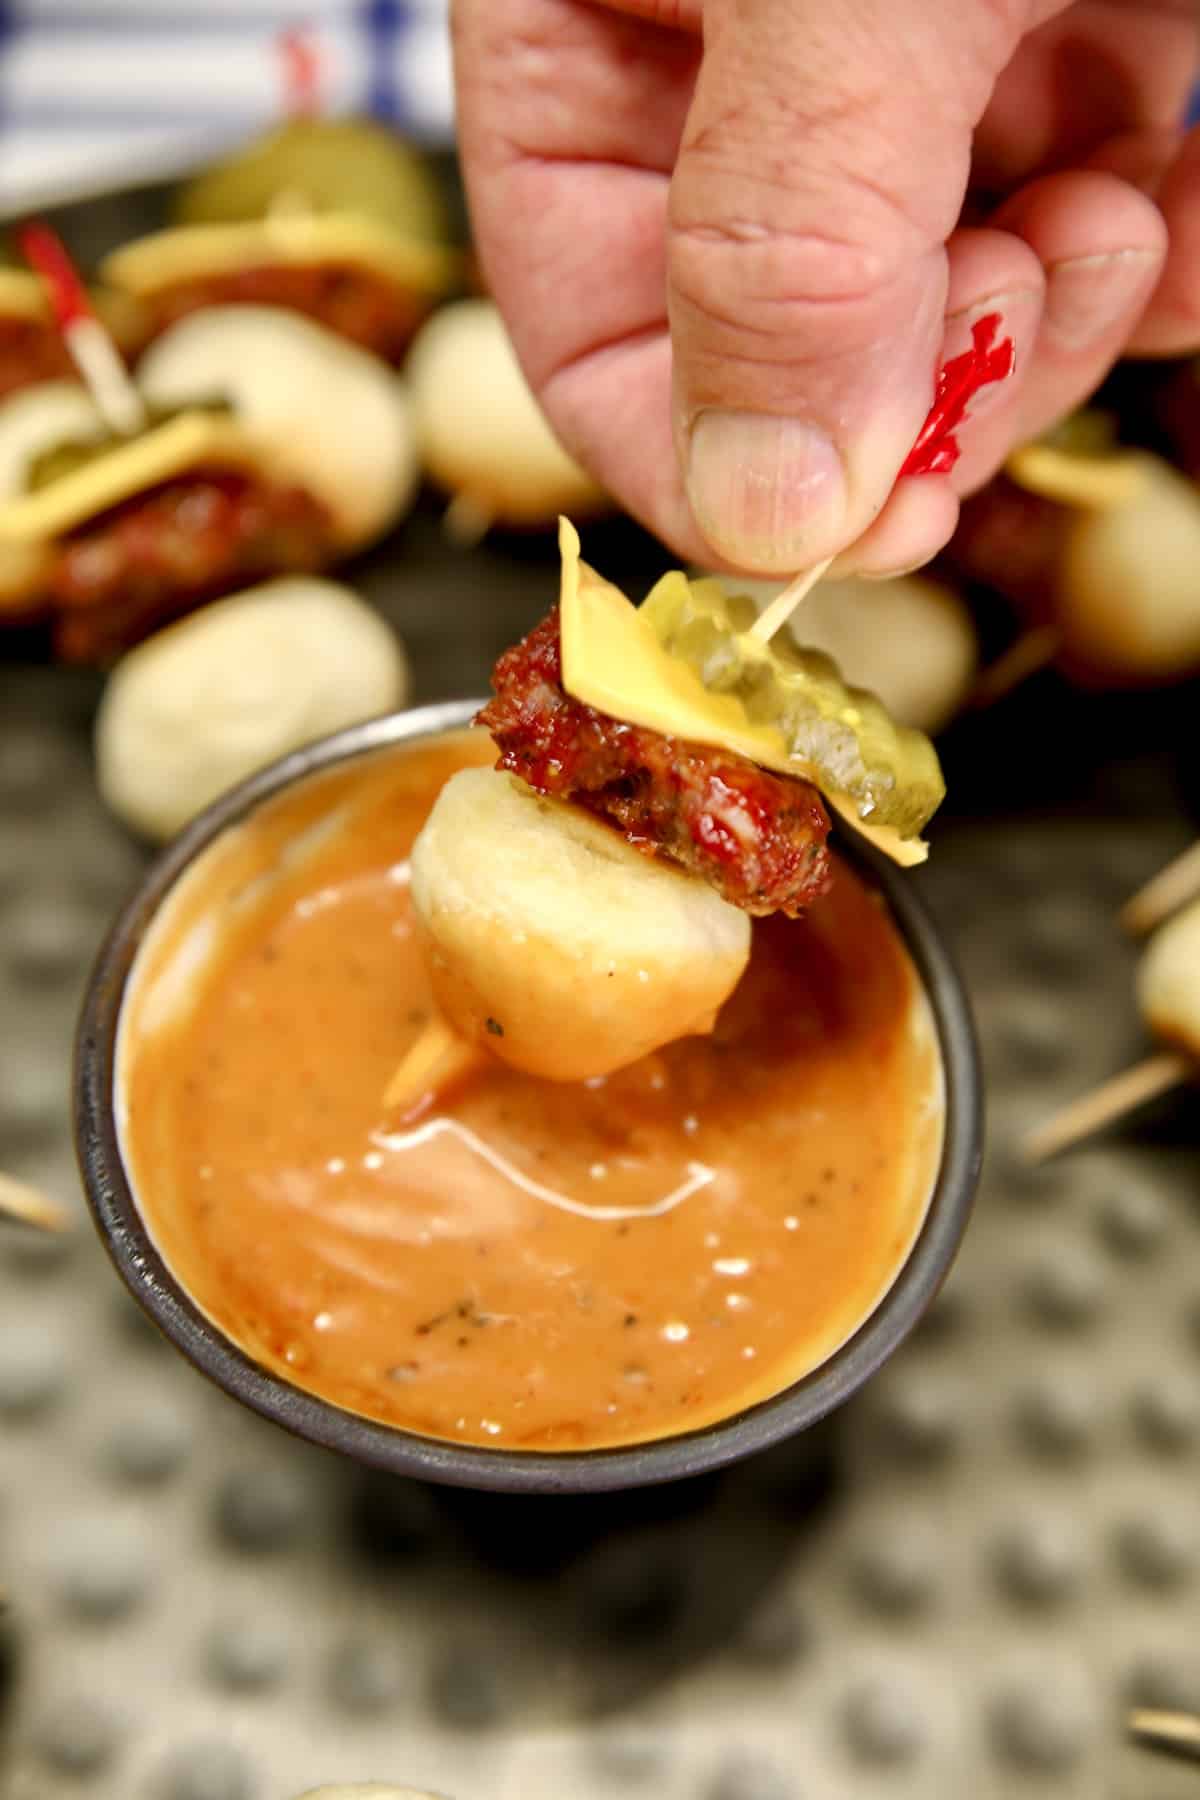 Burger appetizer dipping into sauce. 